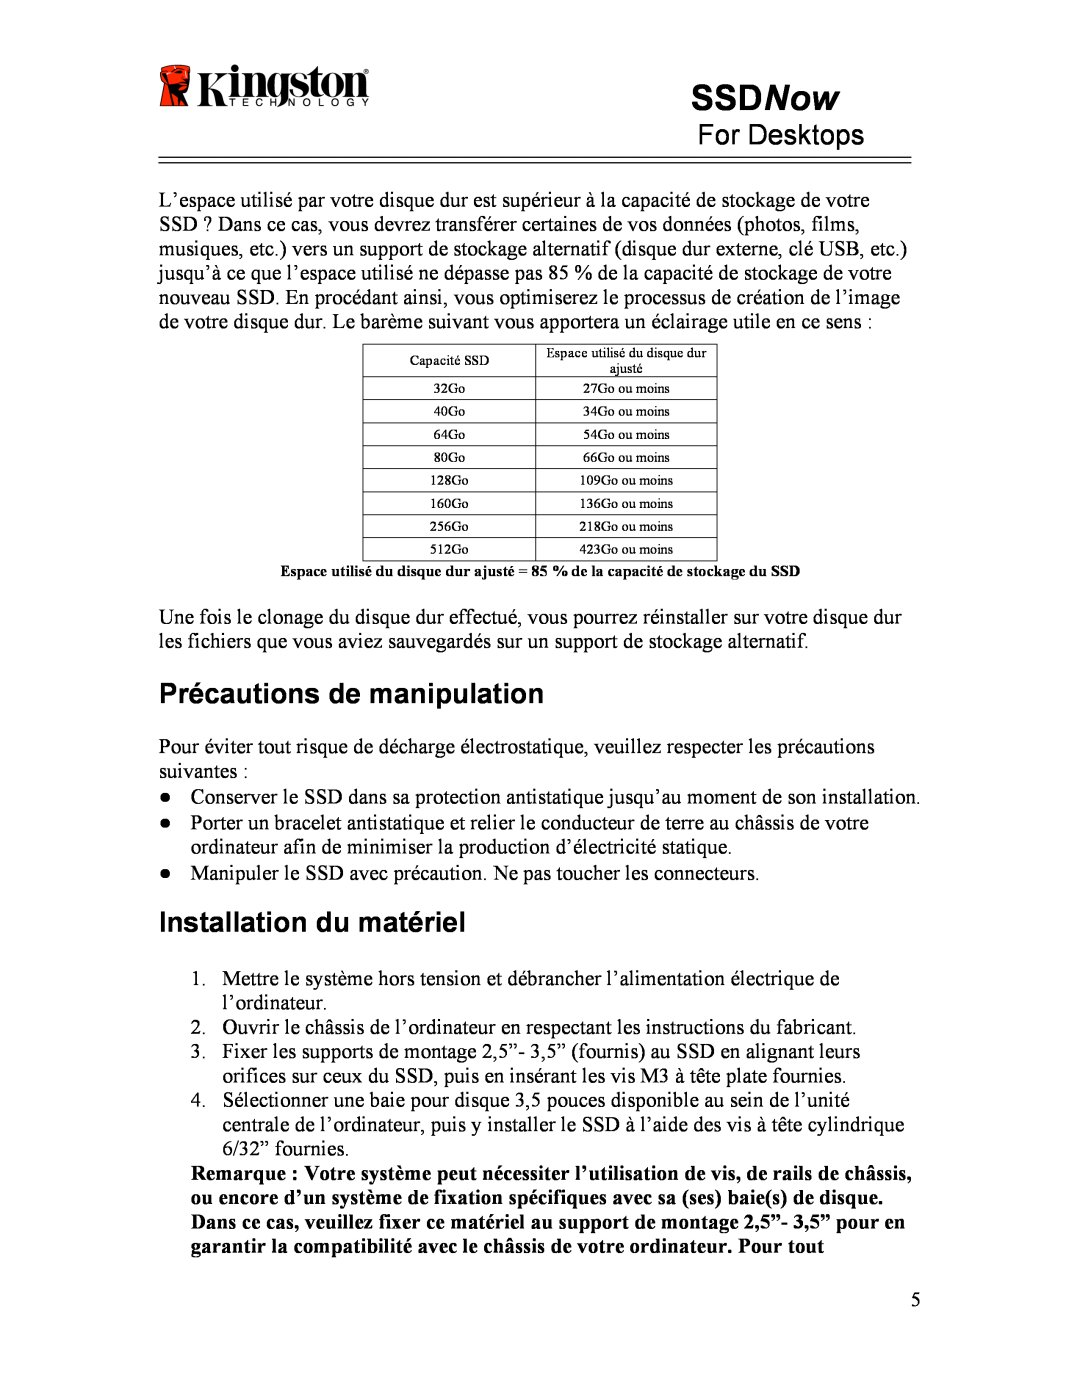 Kingston Technology 07-16-2009 manual Précautions de manipulation, Installation du matériel, SSDNow, For Desktops 